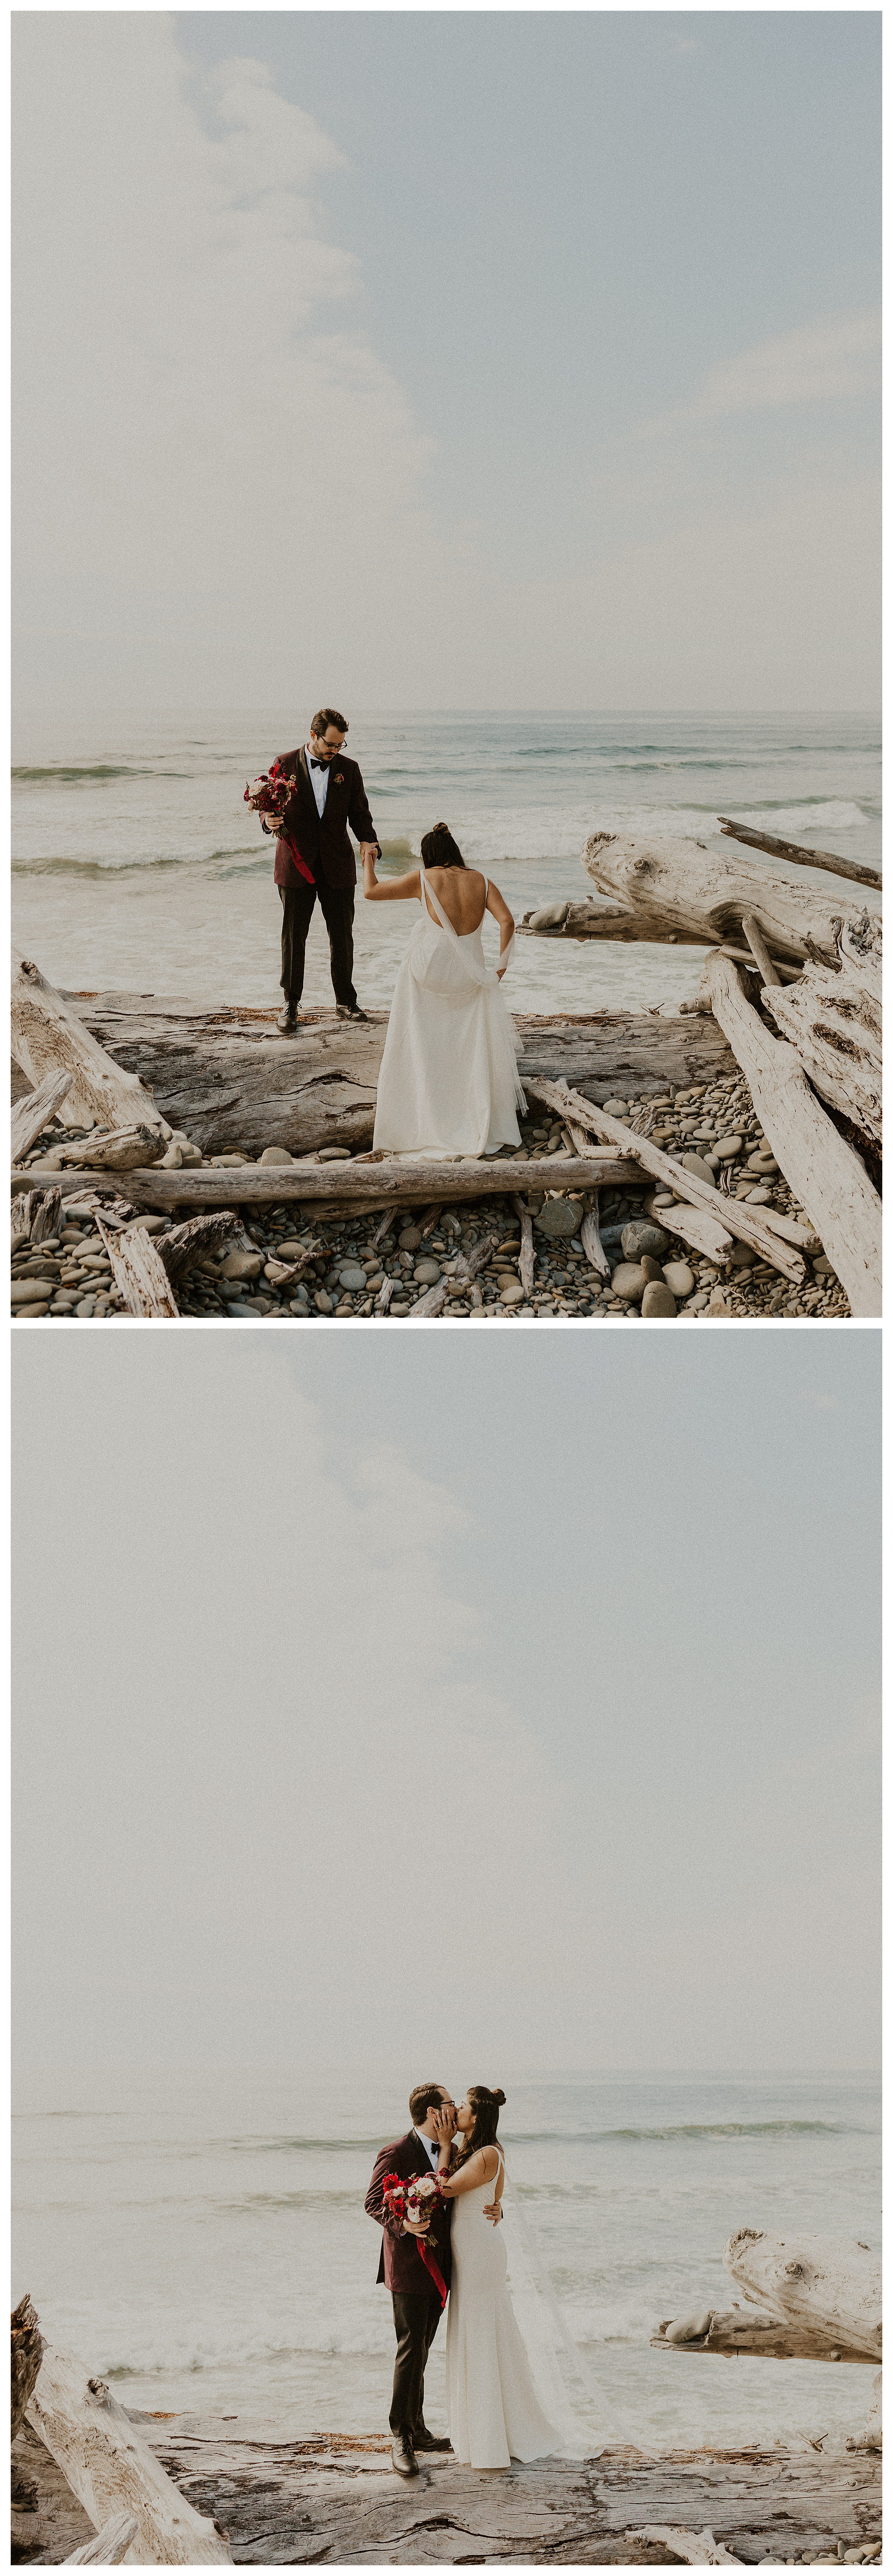 bride and groom standing together olympic national park coastal landscape

